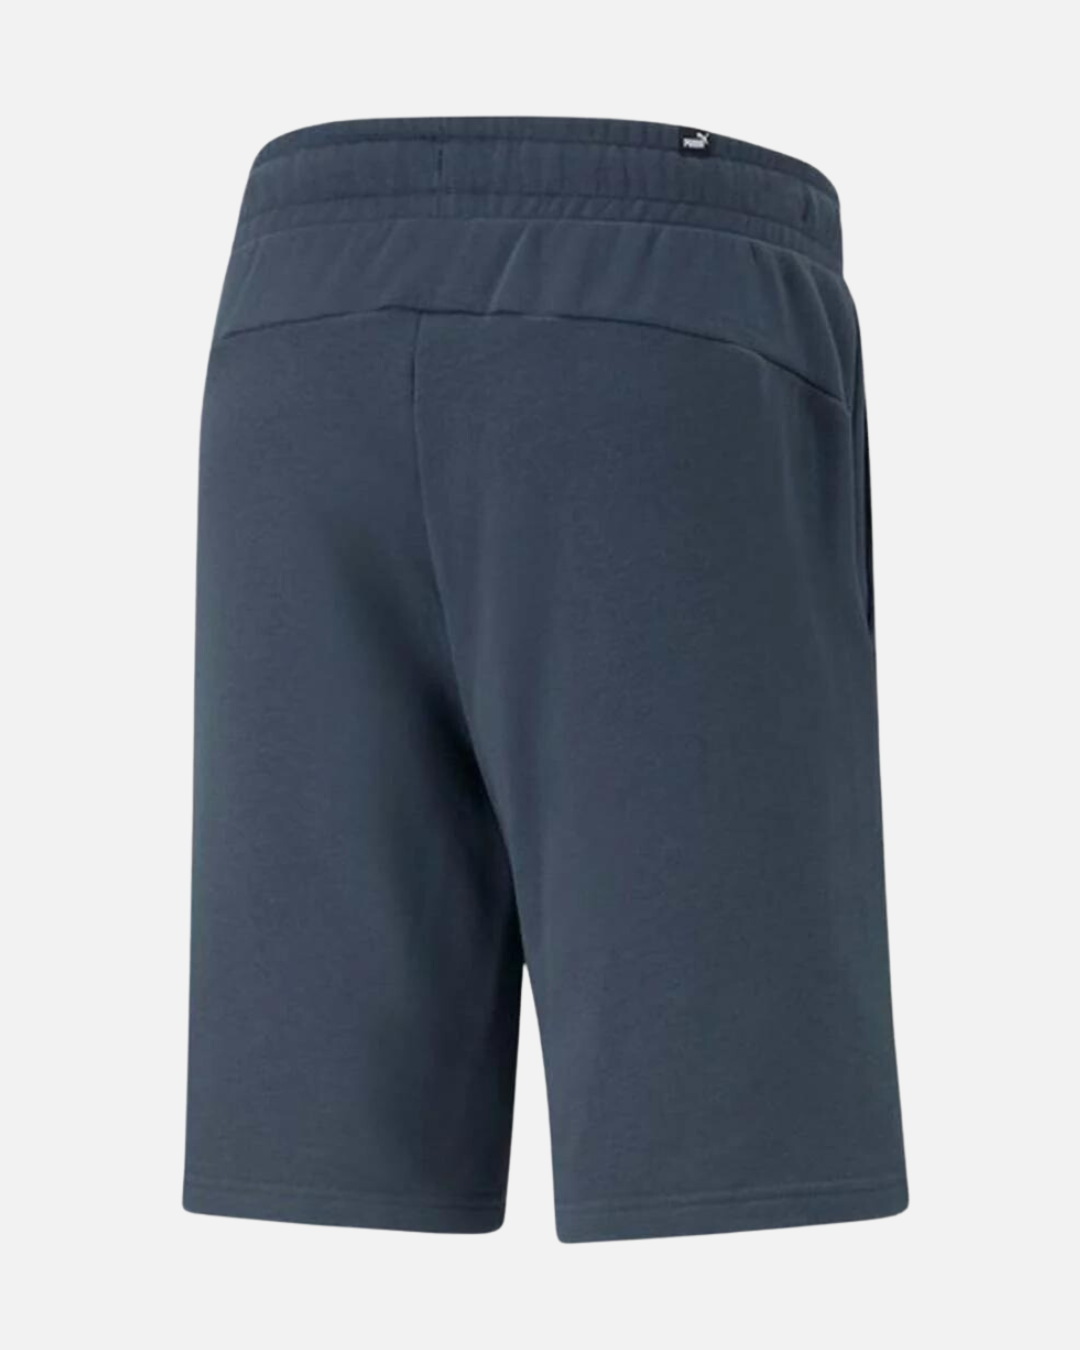 Puma Essentials Shorts - Blue